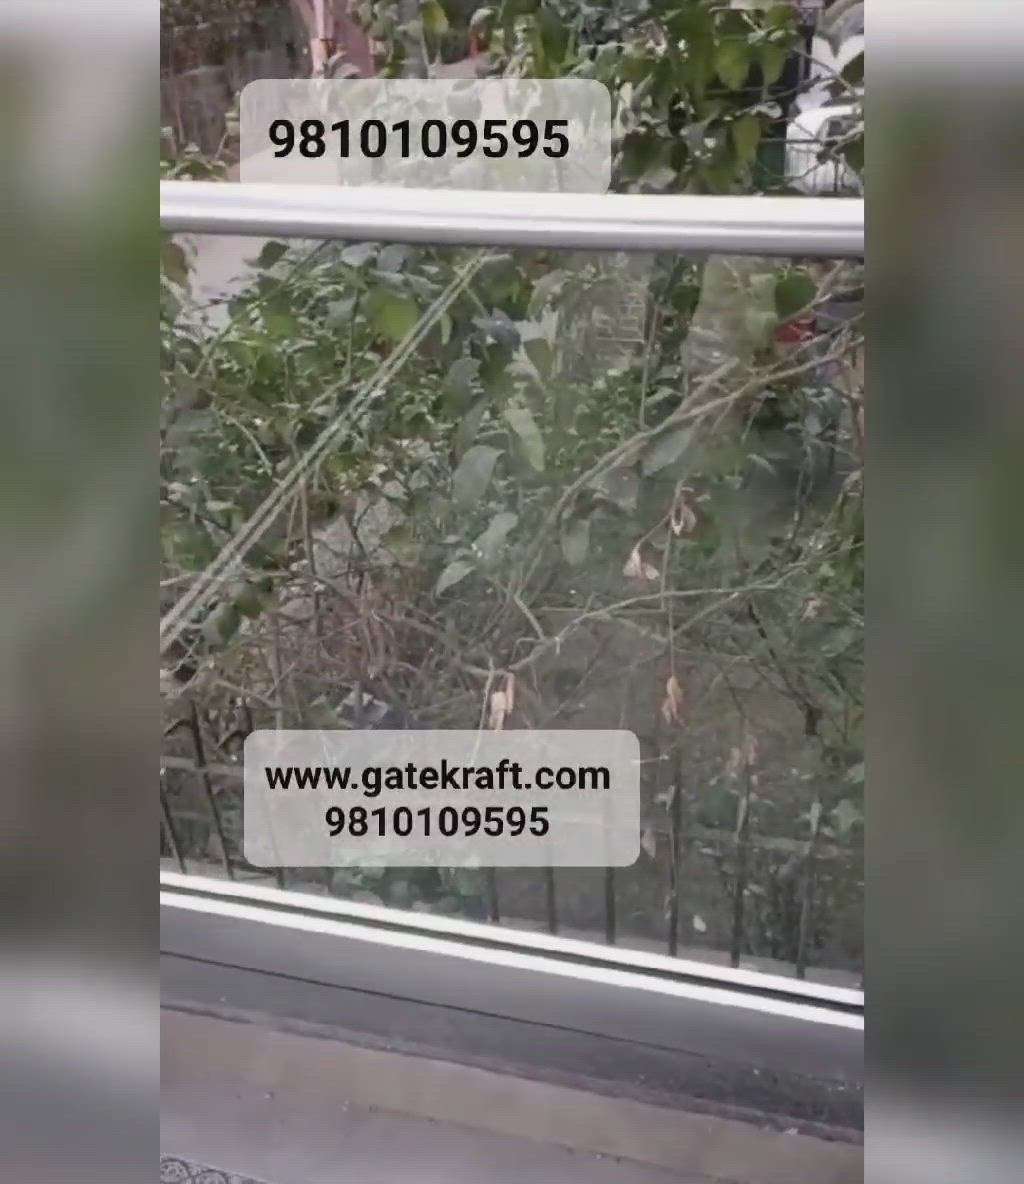 Frameless Balcony Glass railing manufacturers by Gate kraft services in delhi gurgaon noida faridabad ghaziabad ncr #GlassBalconyRailing #glassrailing #Framelessglassrailing #gatekraft